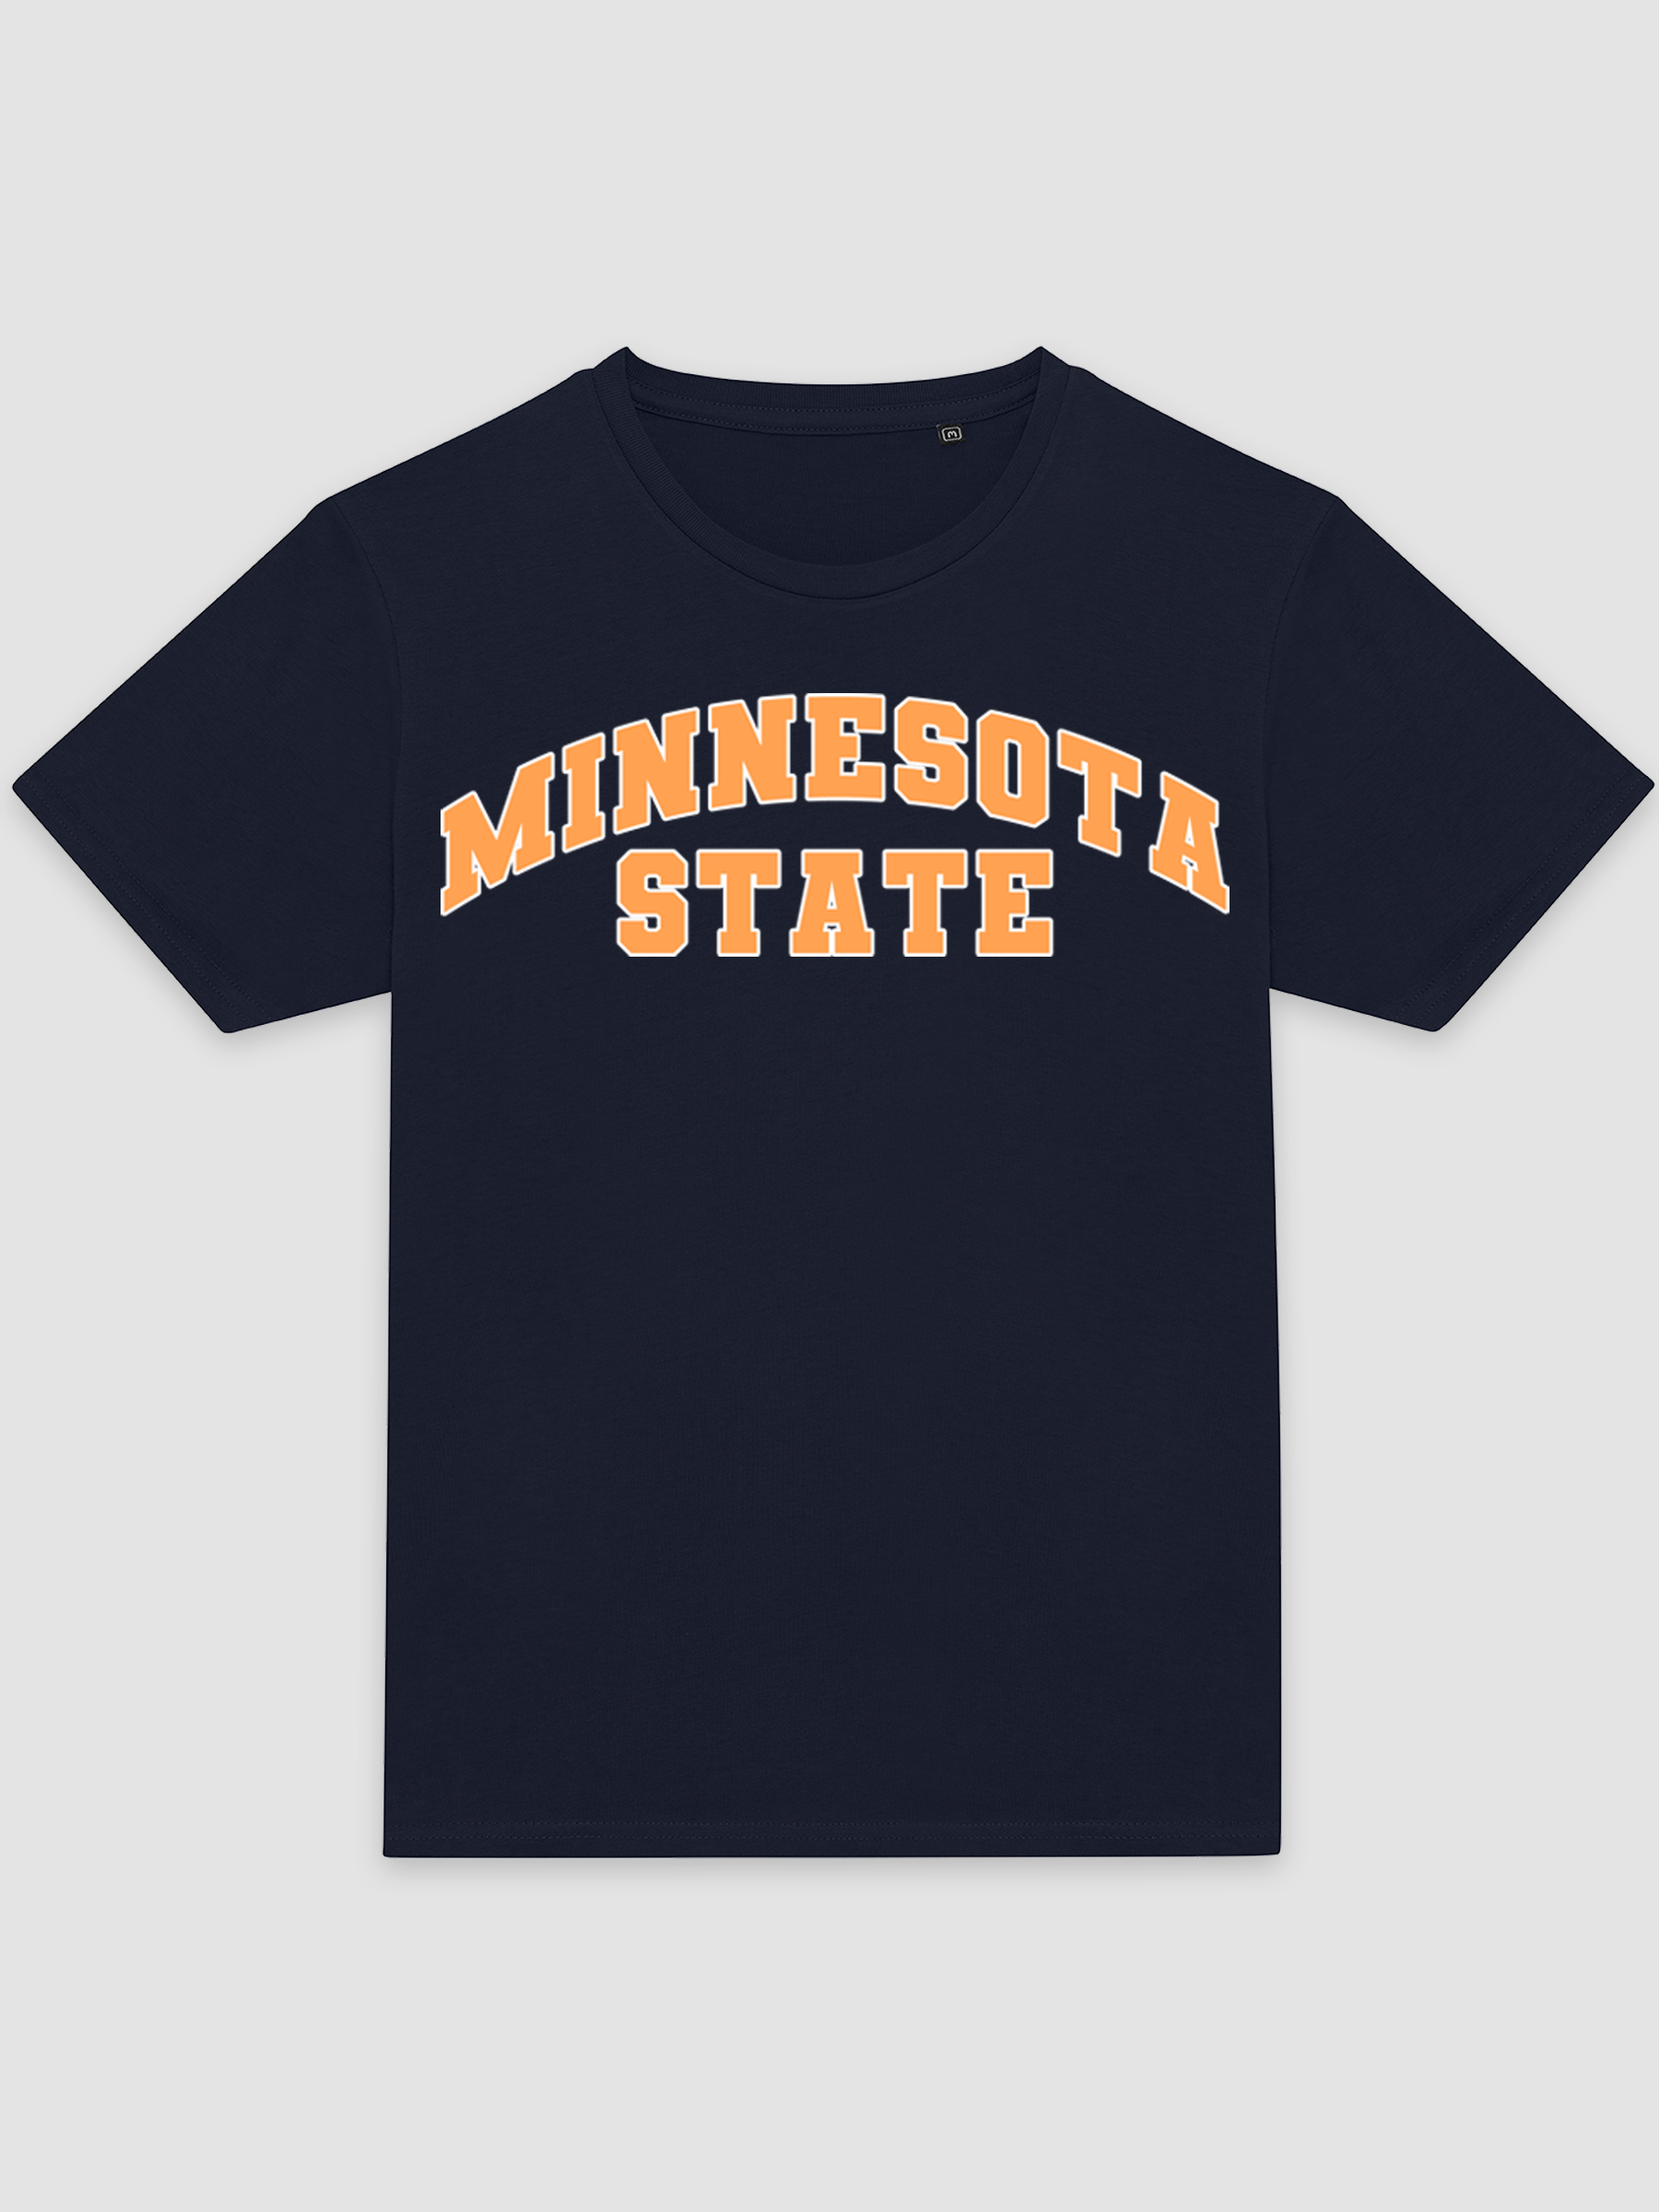 Minnesota State - Navy T-Shirt